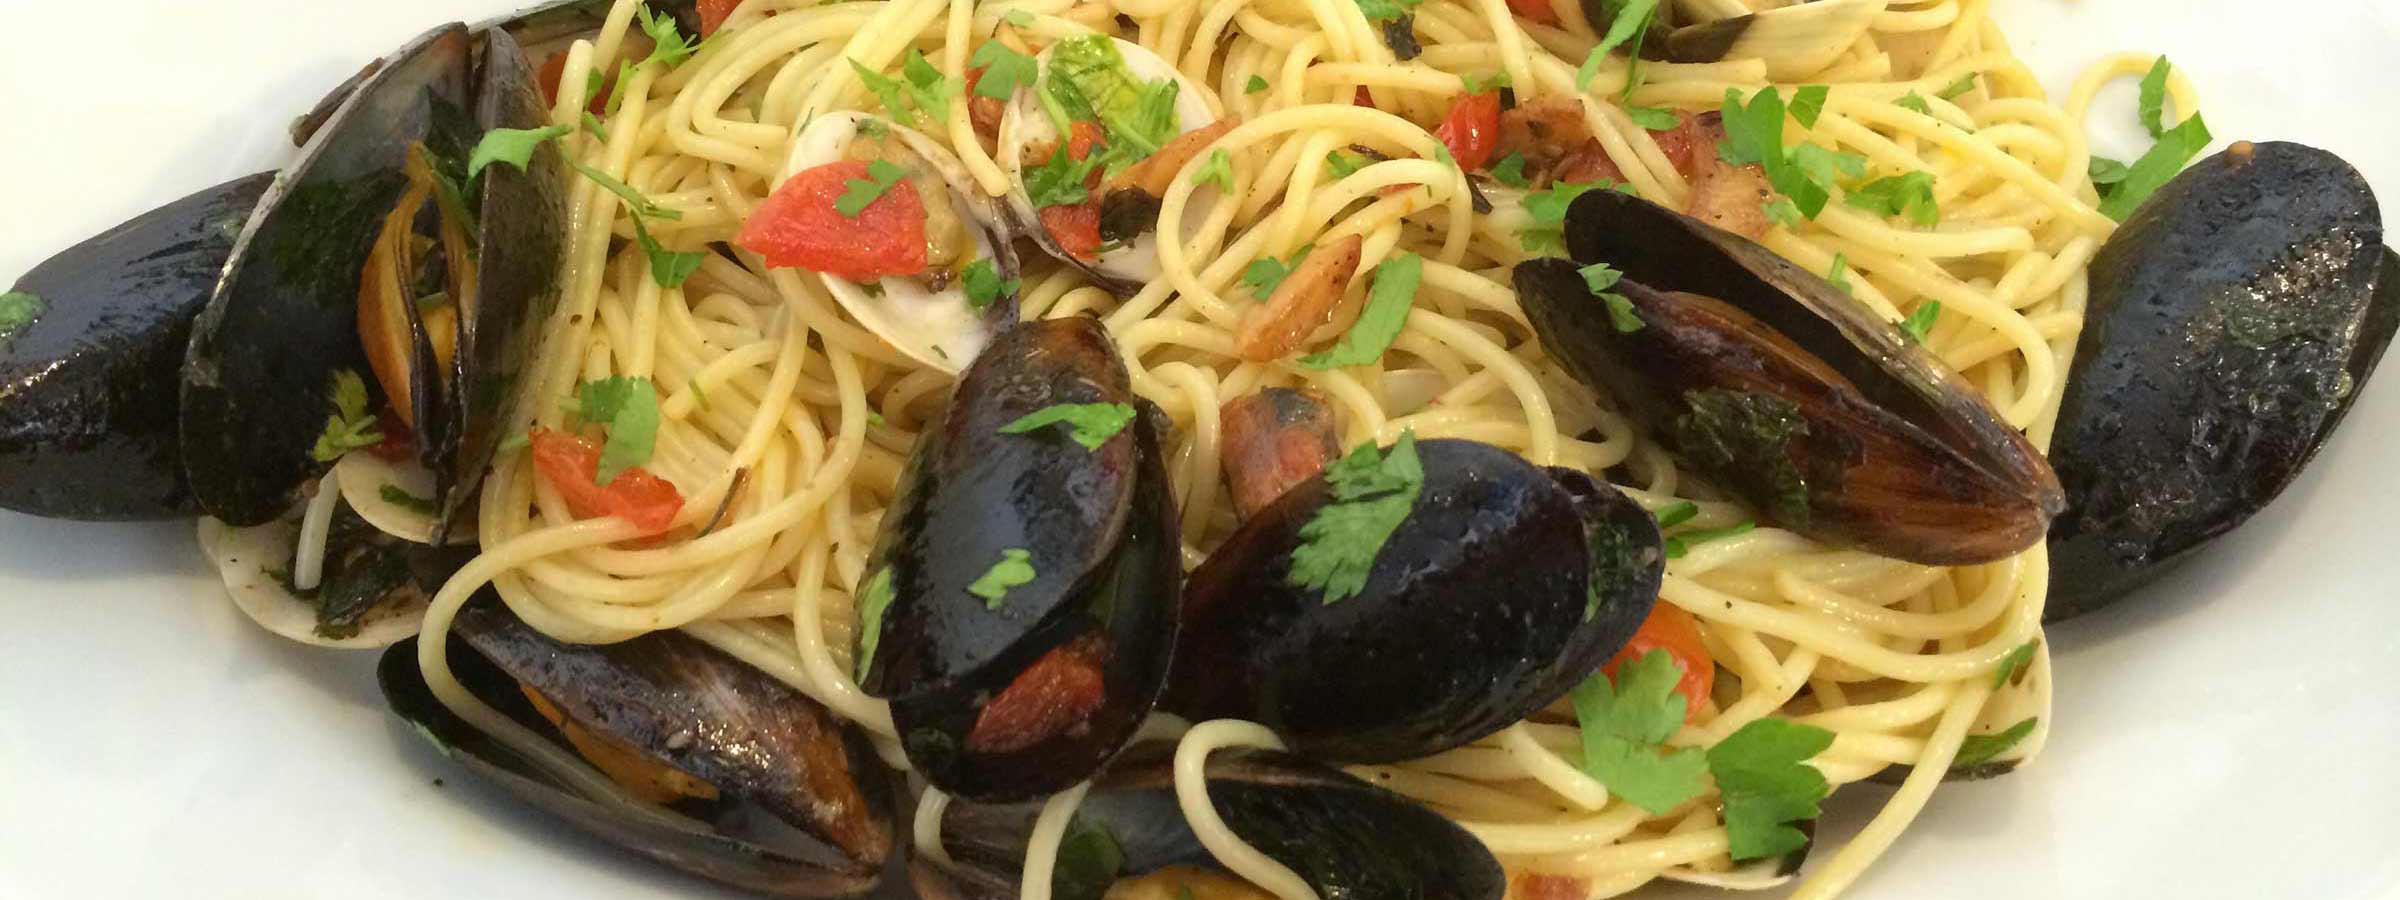 mussels in pasta